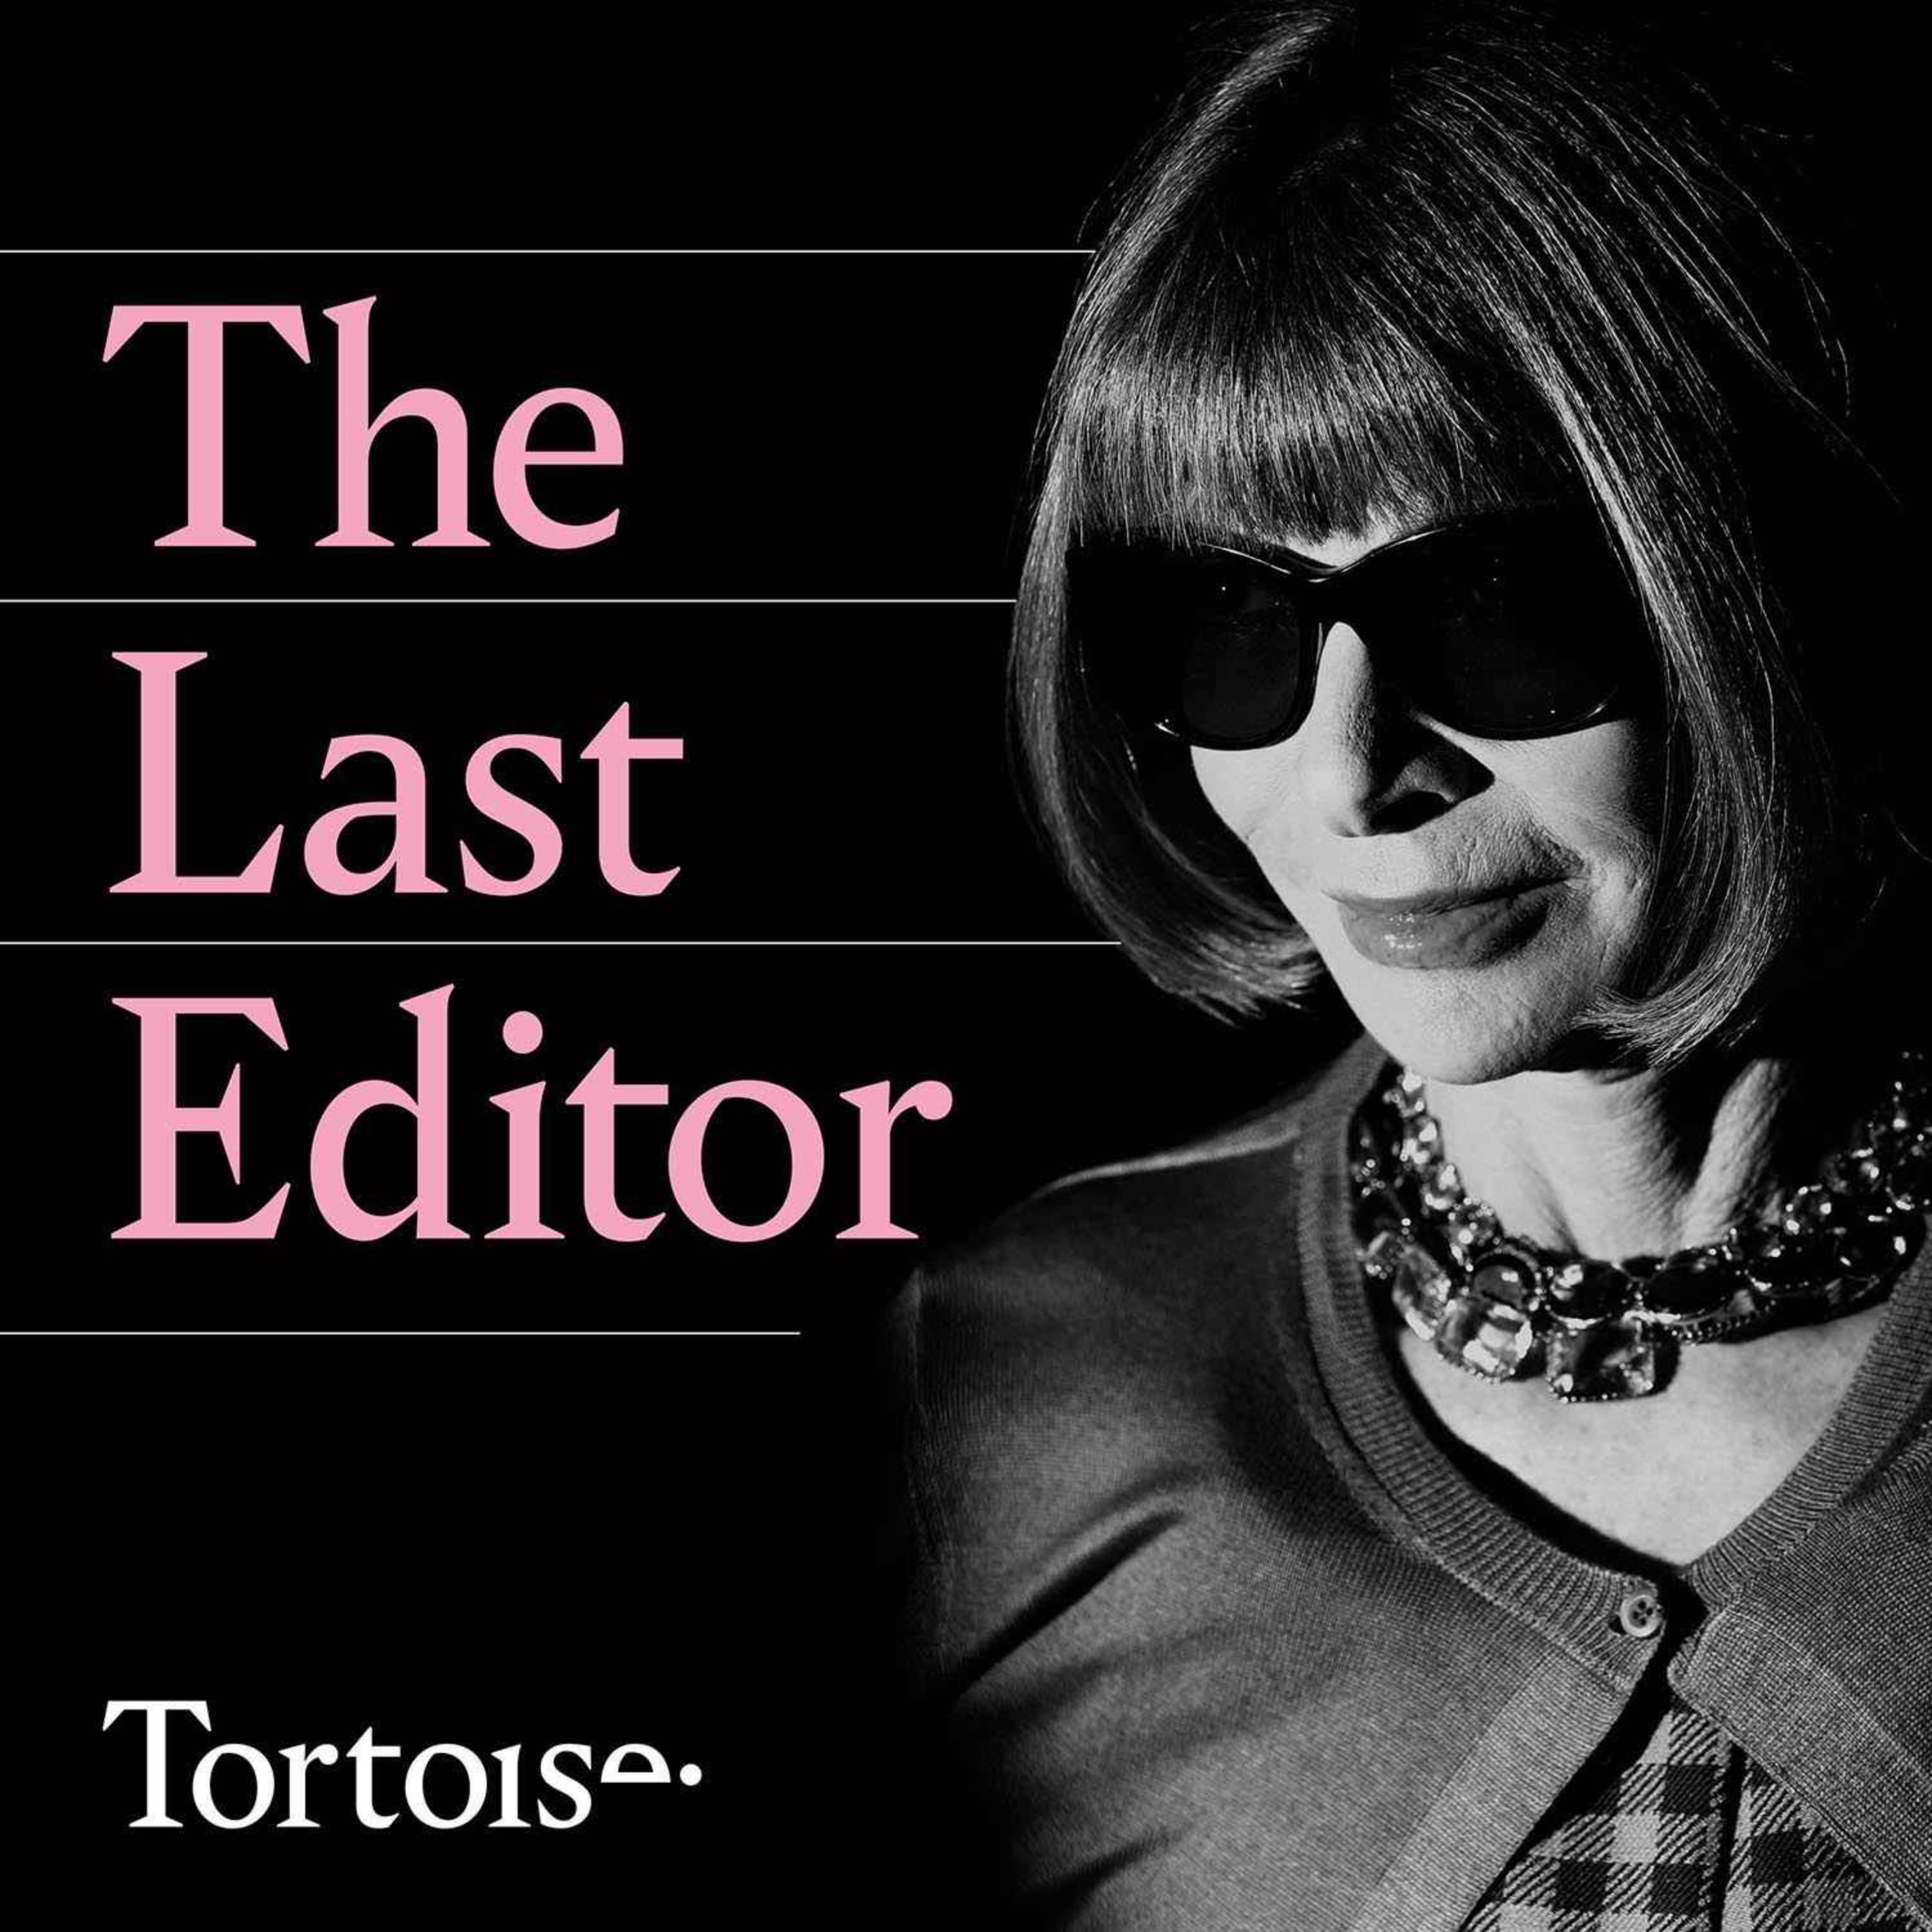 Anna Wintour: The last Editor